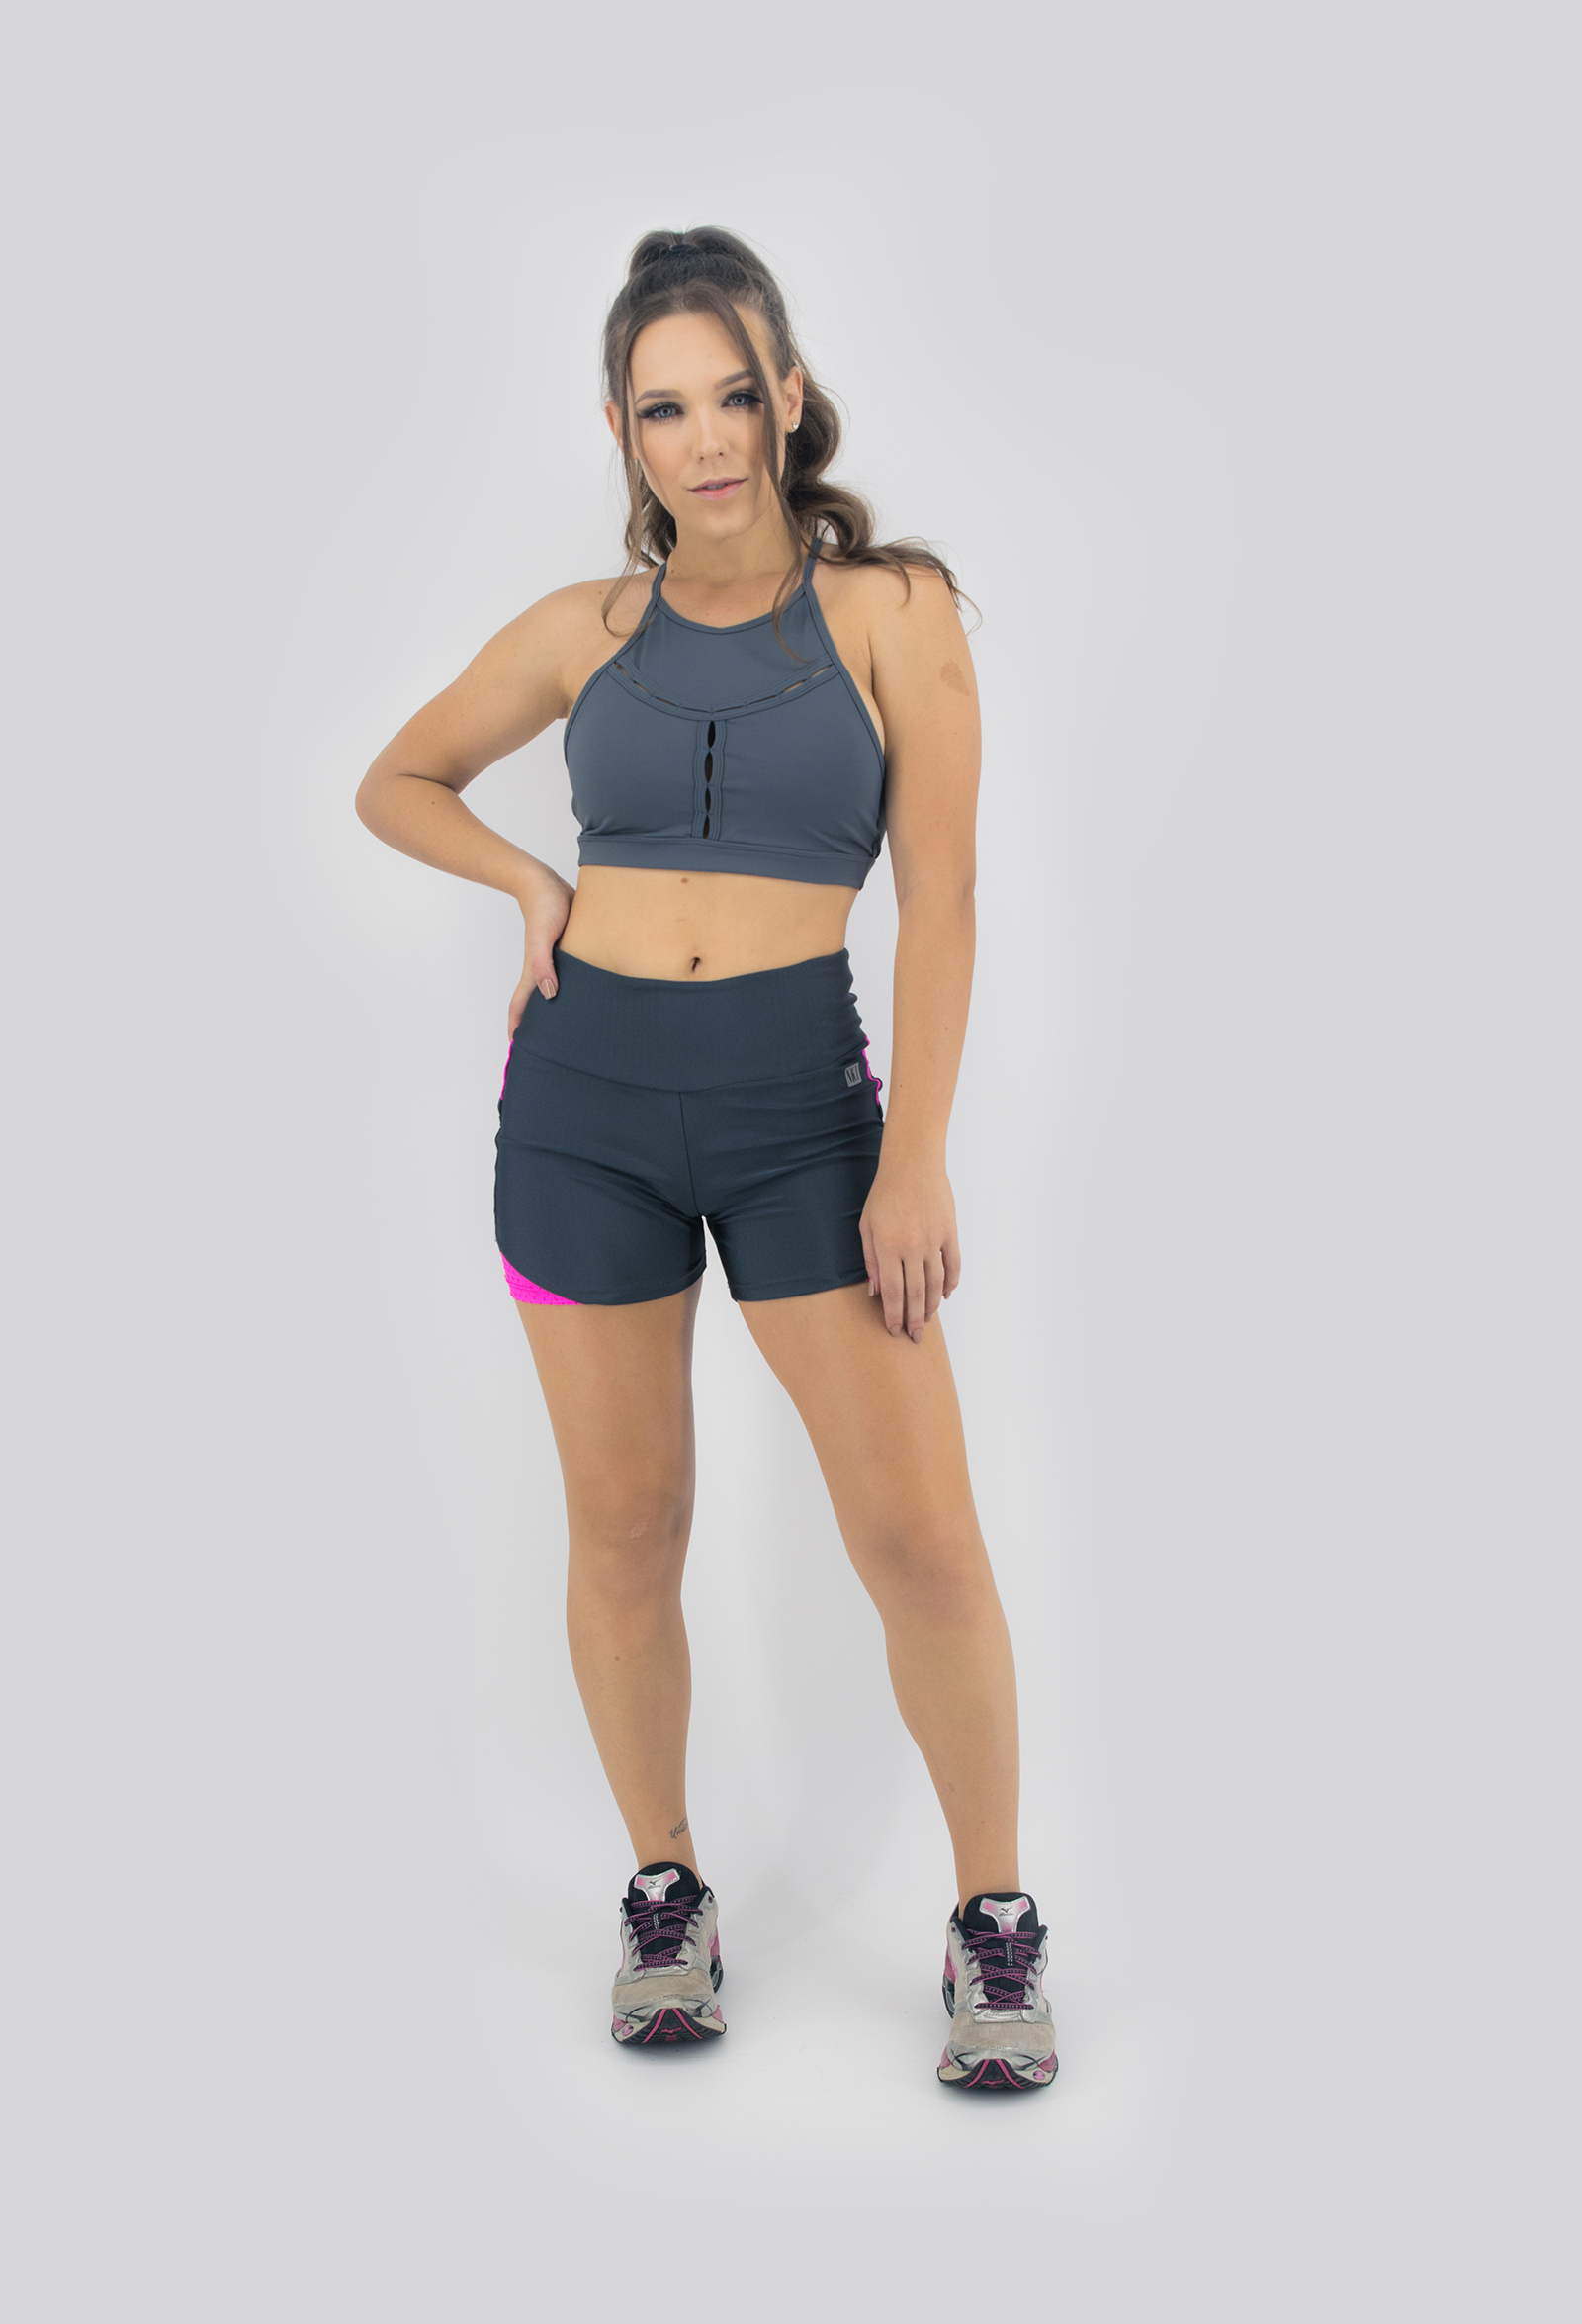 Shorts Life Confort Chumbo, Coleção Move Your Body - NKT Fitwear Moda Fitness